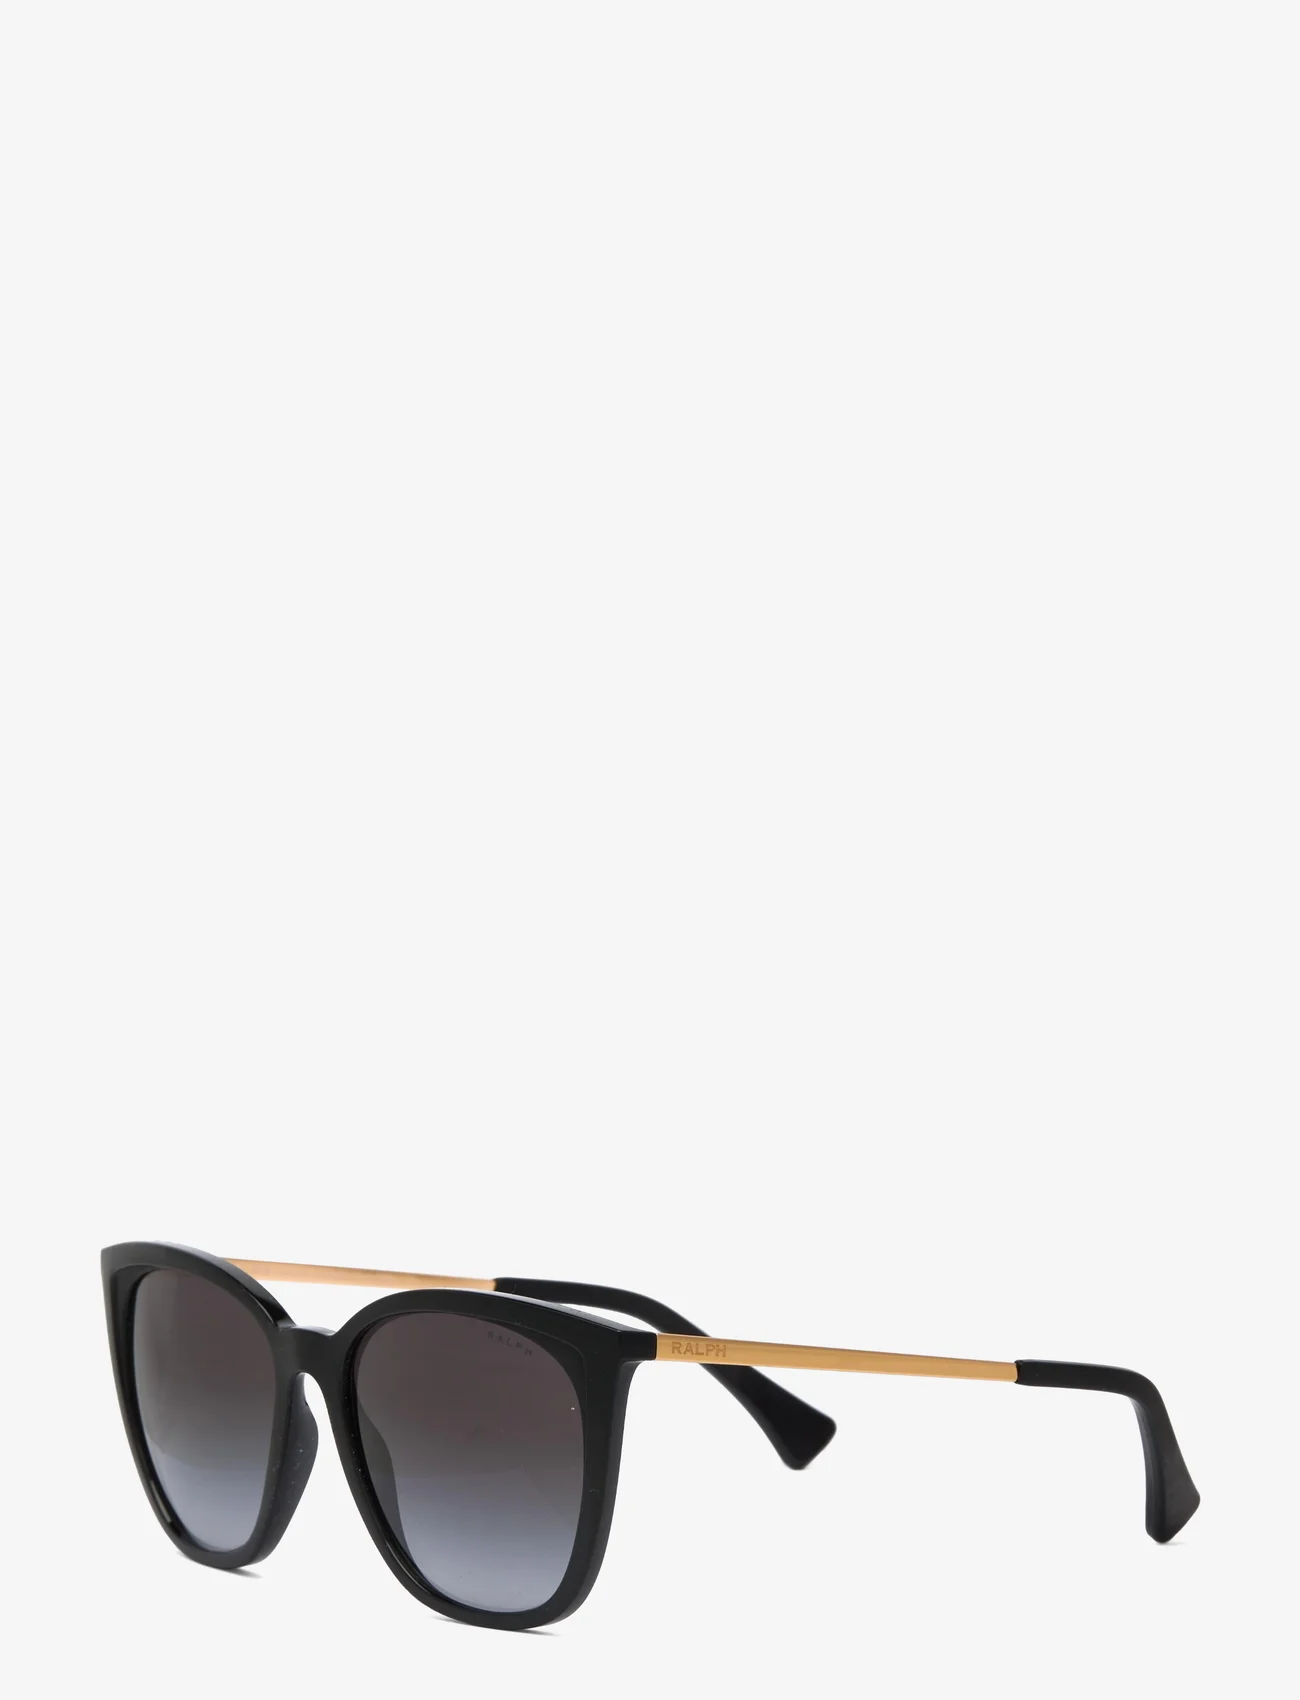 Ralph Ralph Lauren Sunglasses - 0RA5280 - cateye - shiny black - 1